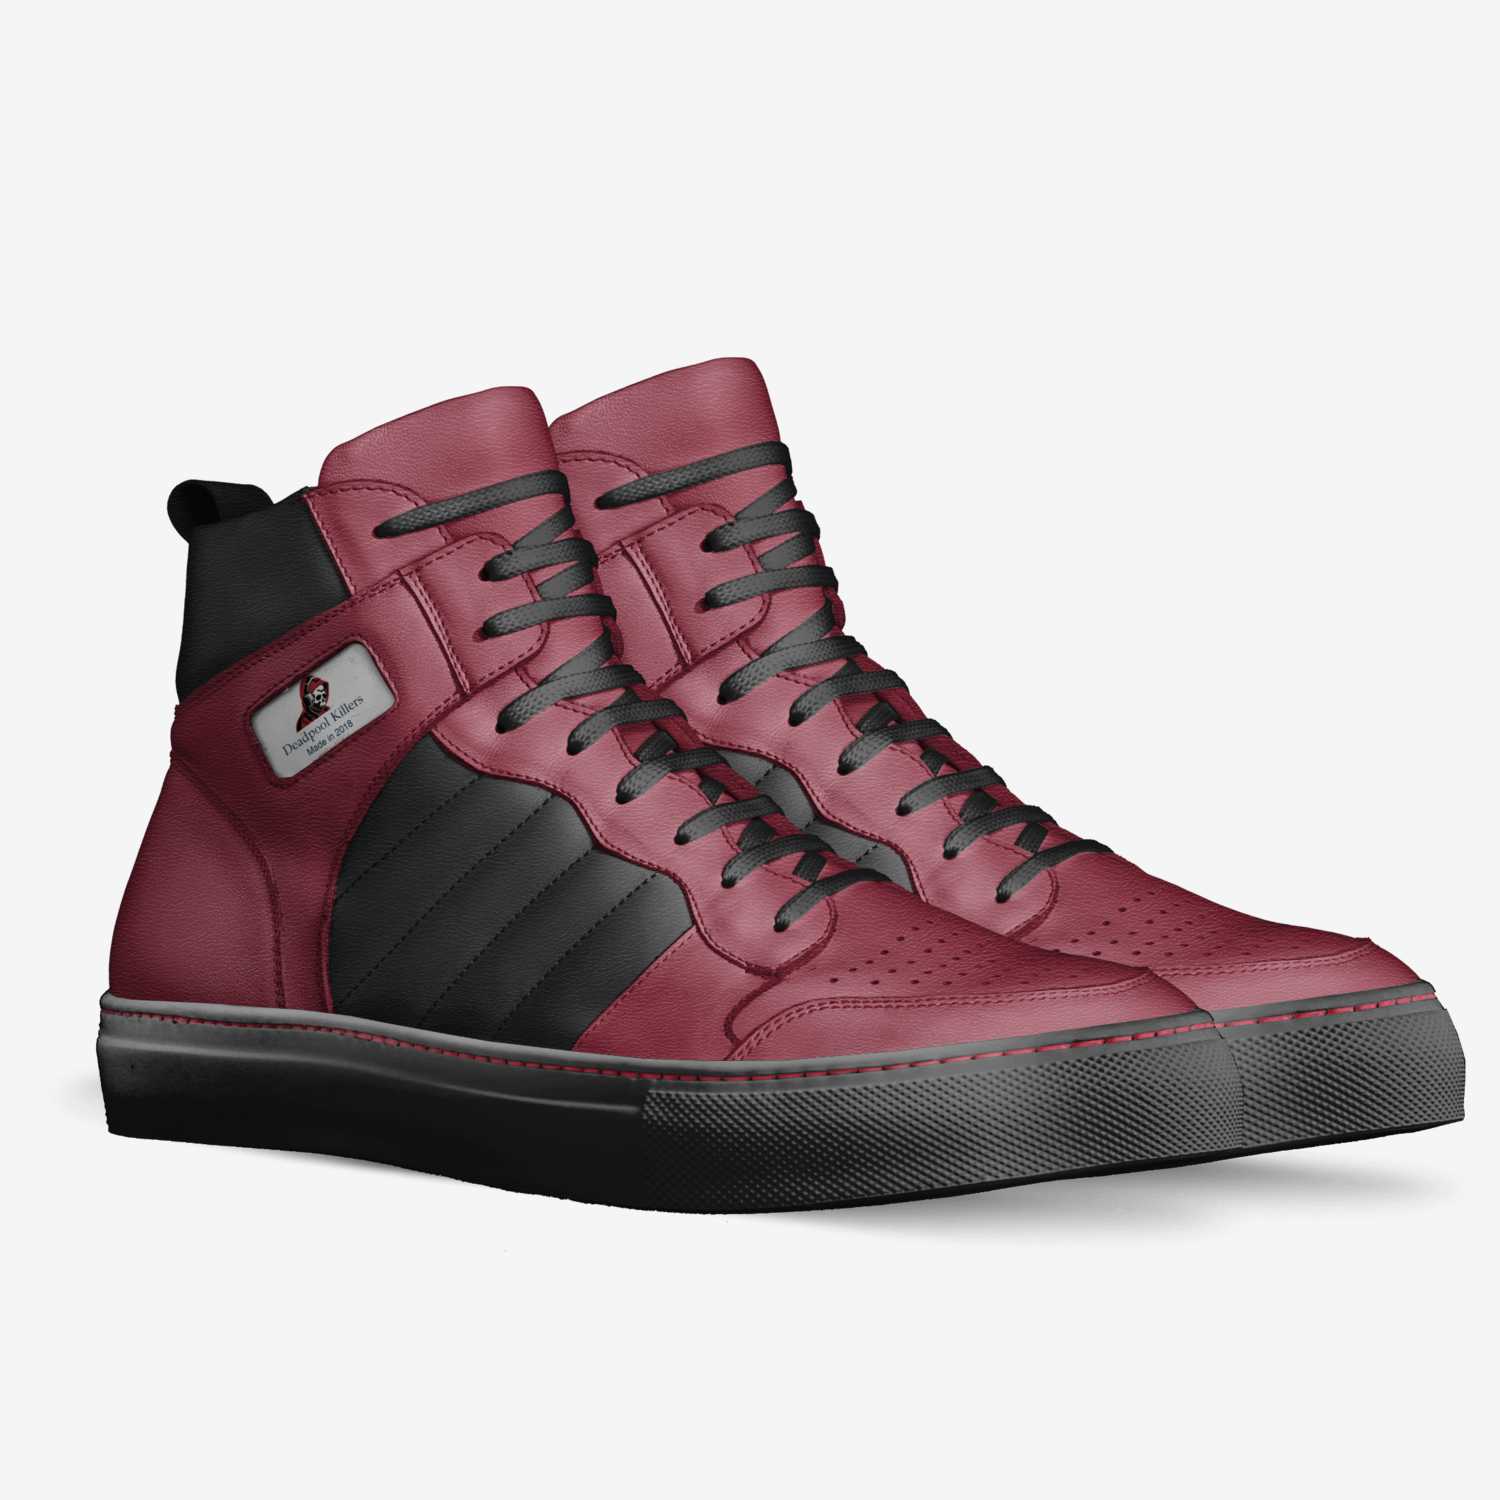 Deadpool Custom Name Air Jordan 13 Shoes